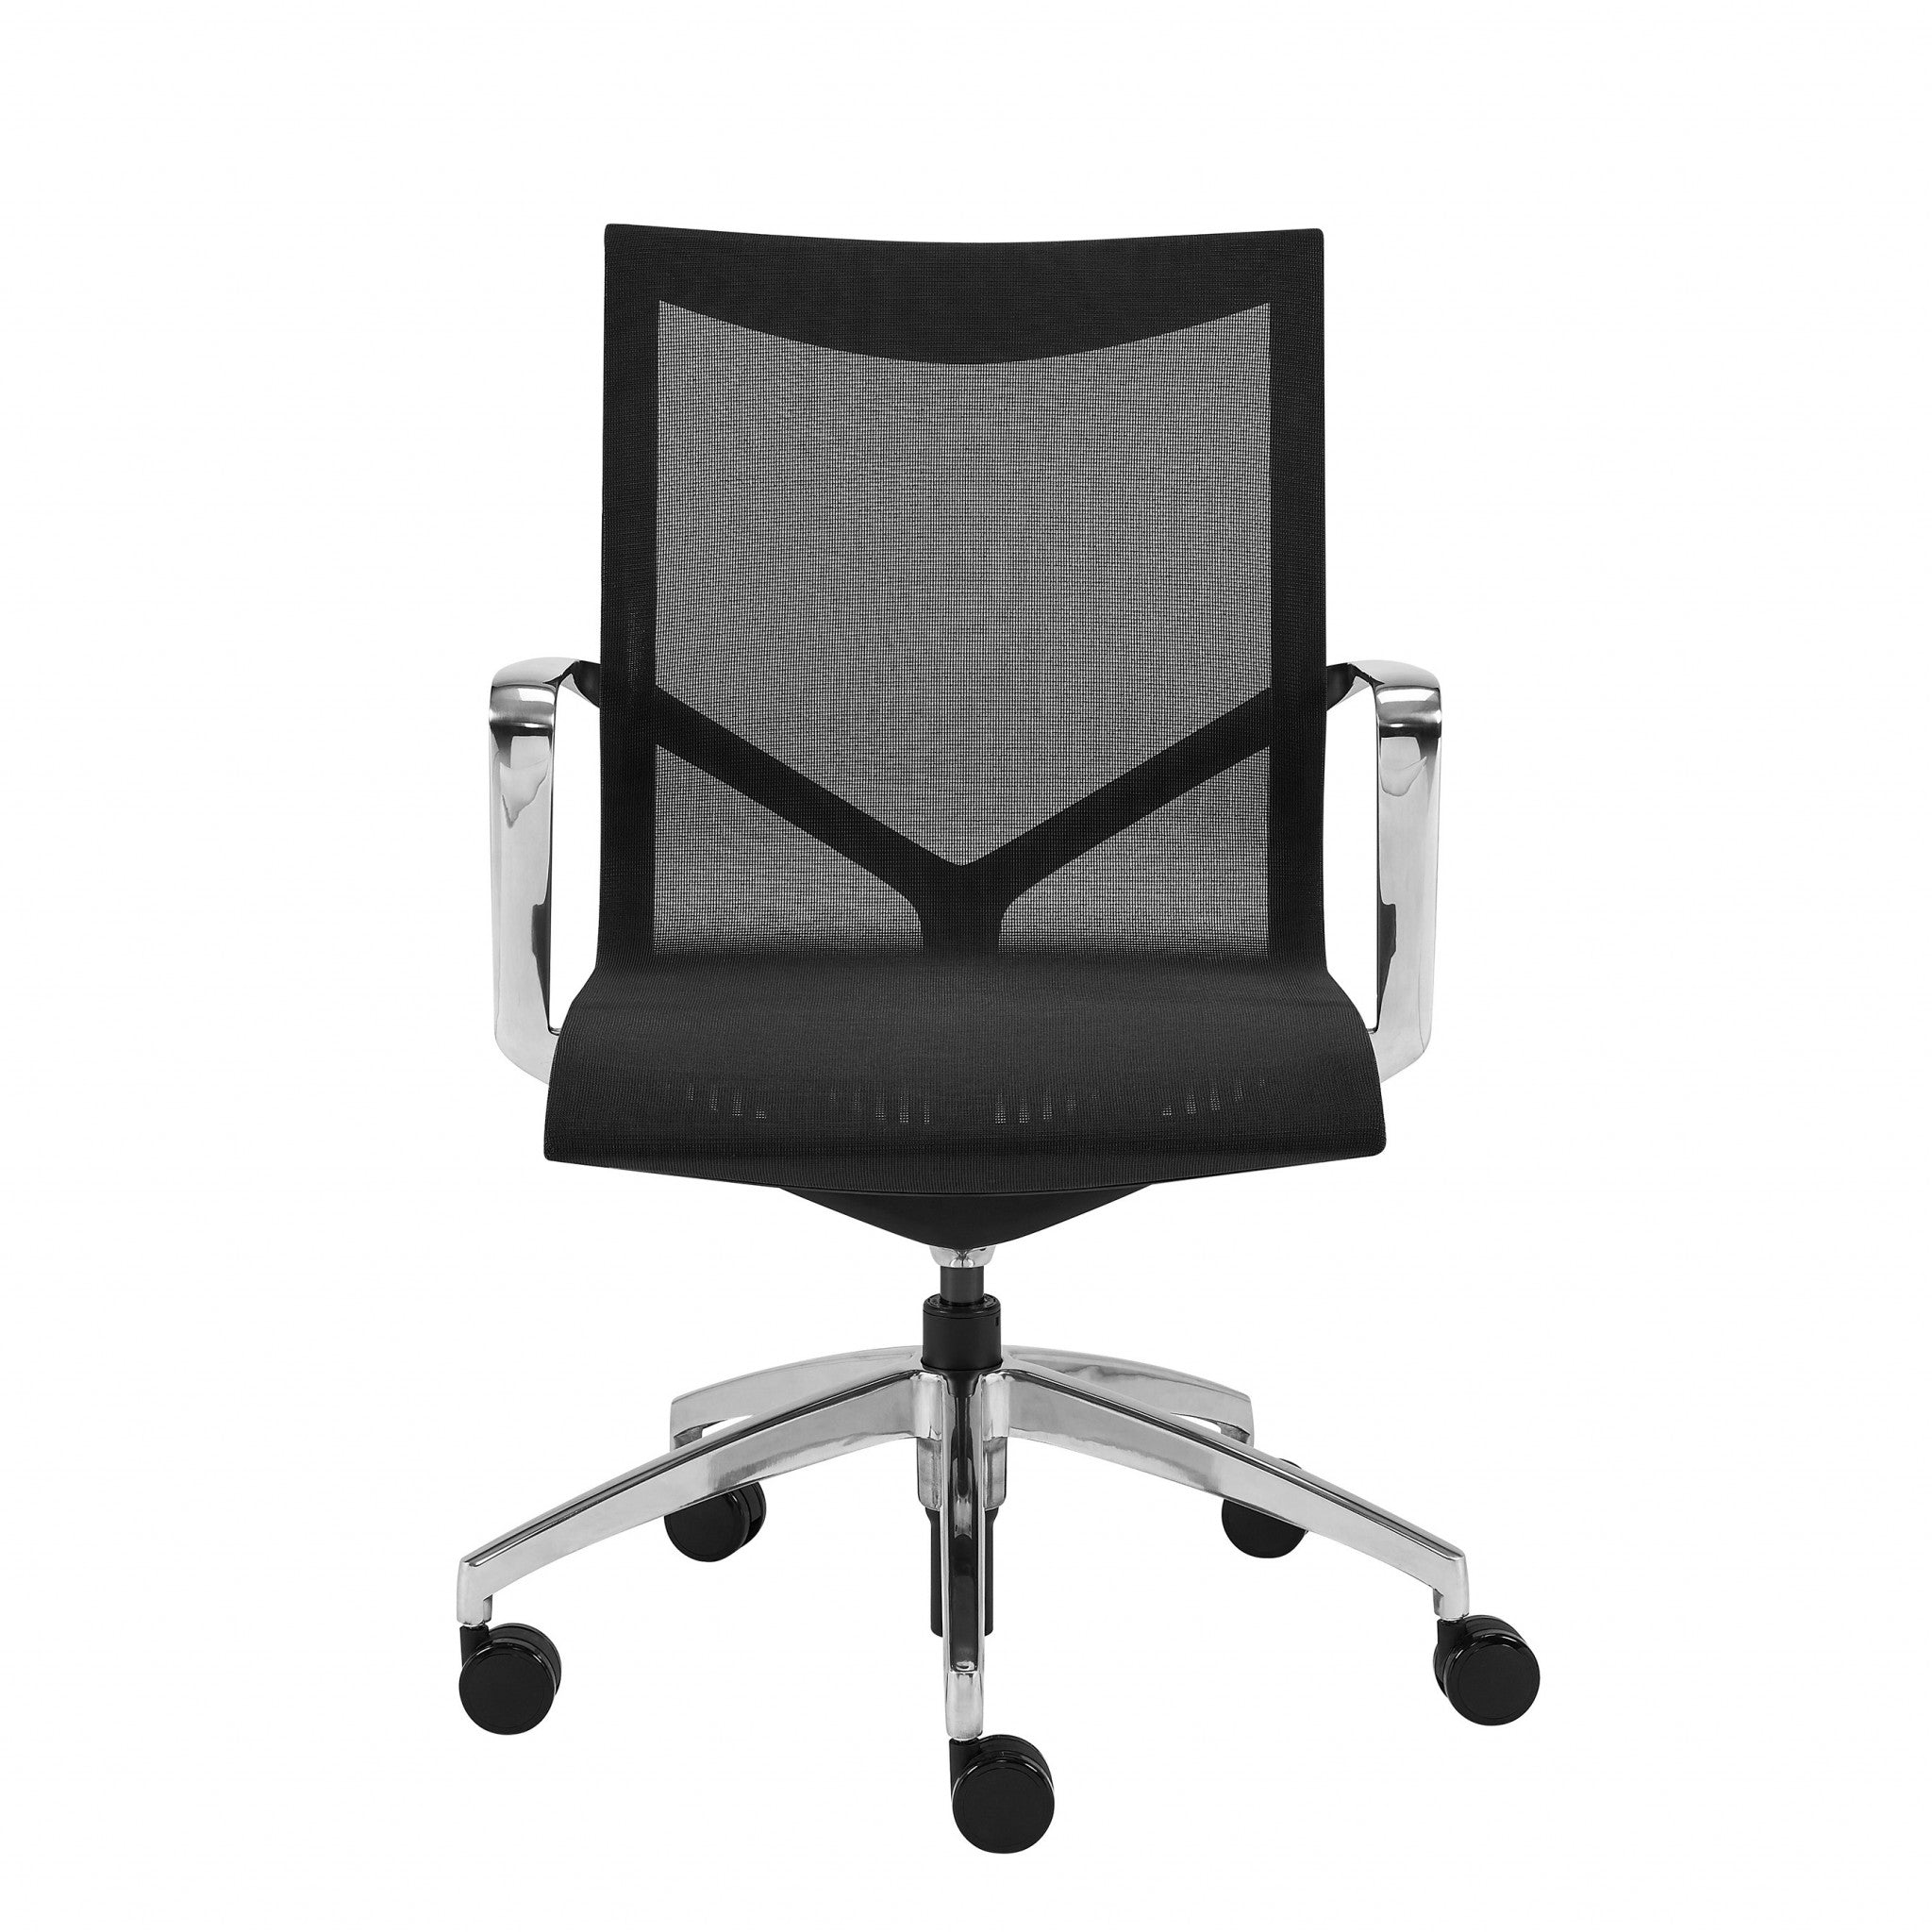 Black-Swivel-Task-Chair-Mesh-Back-Steel-Frame-Office-Chairs